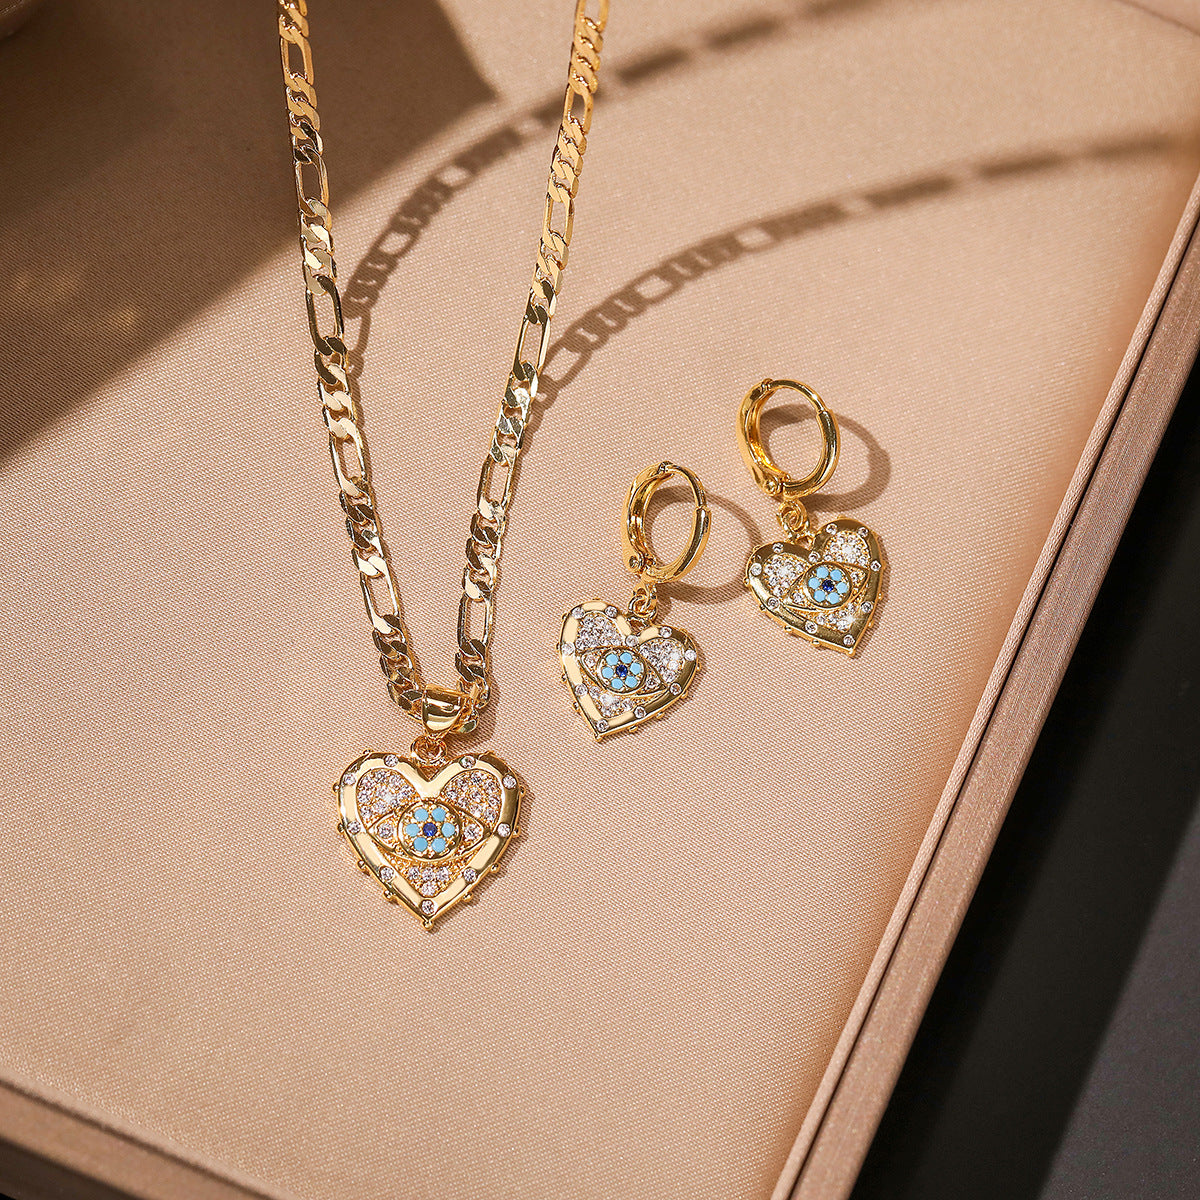 Stylish Heart-shaped Zircon Pendant Necklace and Earrings Set - Fashion Jewelry